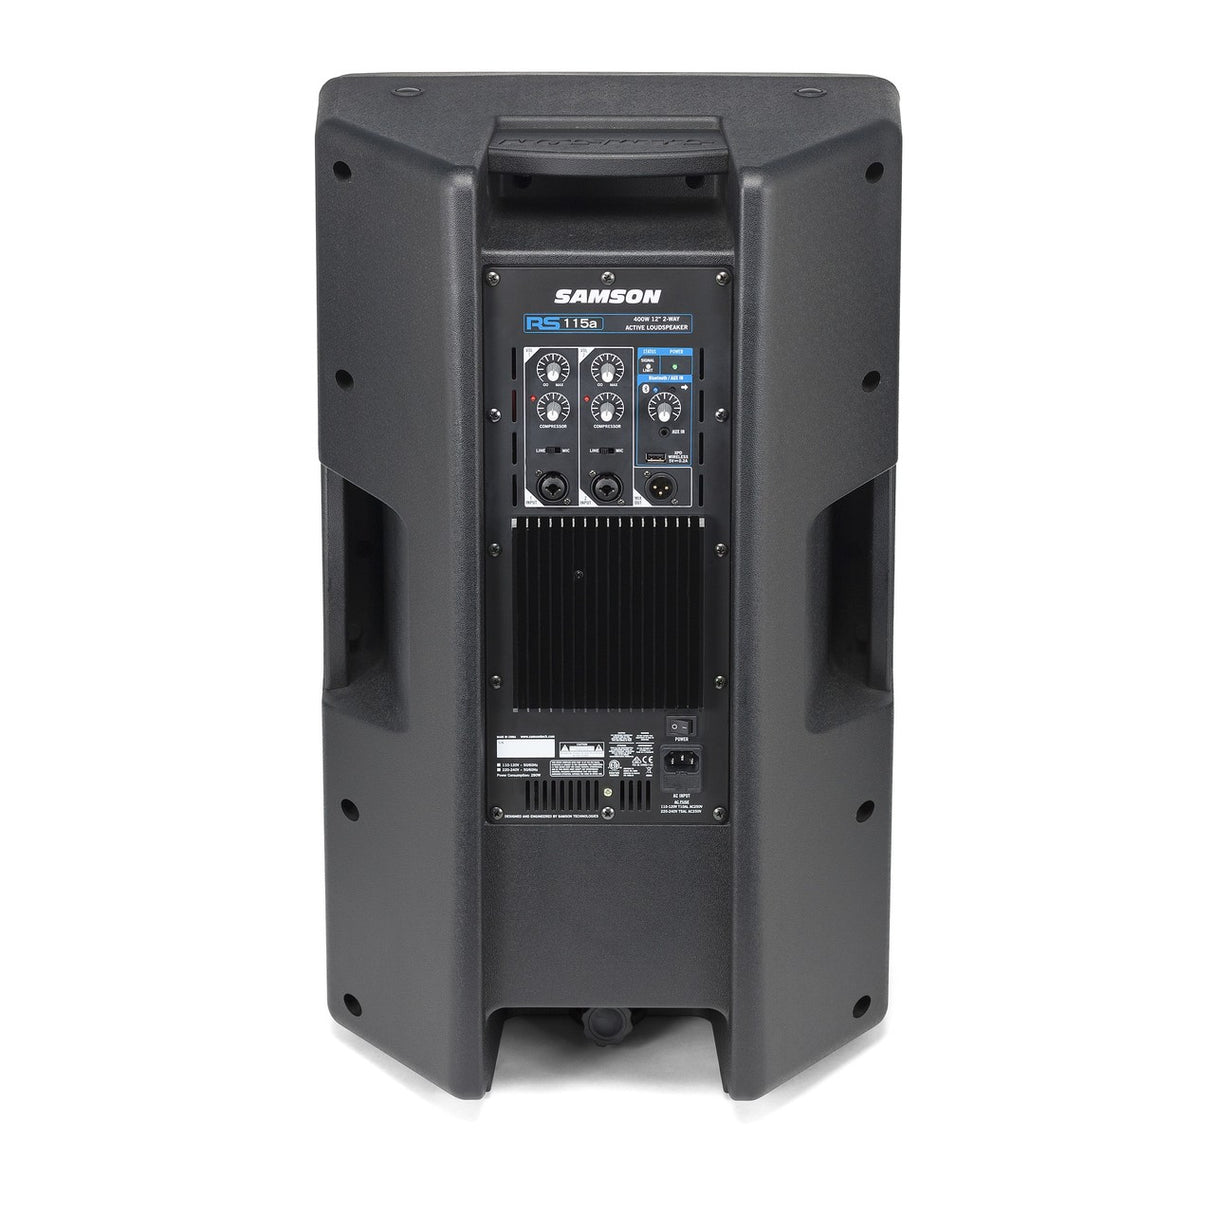 Samson RS115a 400W 2-Way Active Loudspeaker